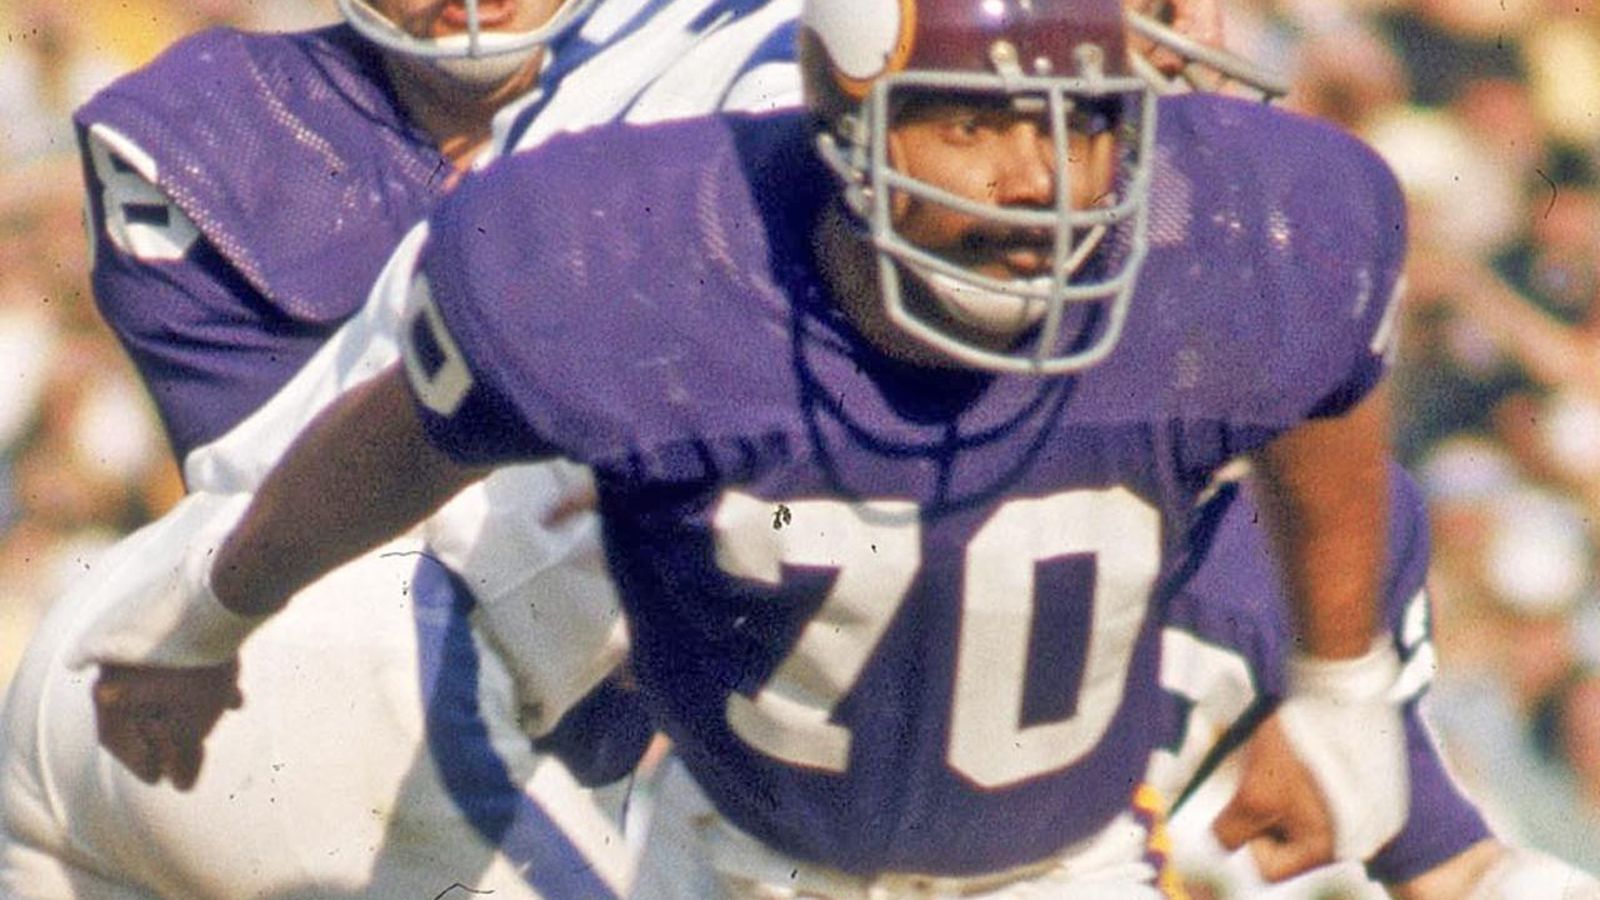 
                <strong>Jim Marshall (Defensive End) - 20 Saisons</strong><br>
                Erste Saison: 1960Letzte Saison: 1979In der NFL aktiv für: Cleveland Browns, Minnesota Vikings
              